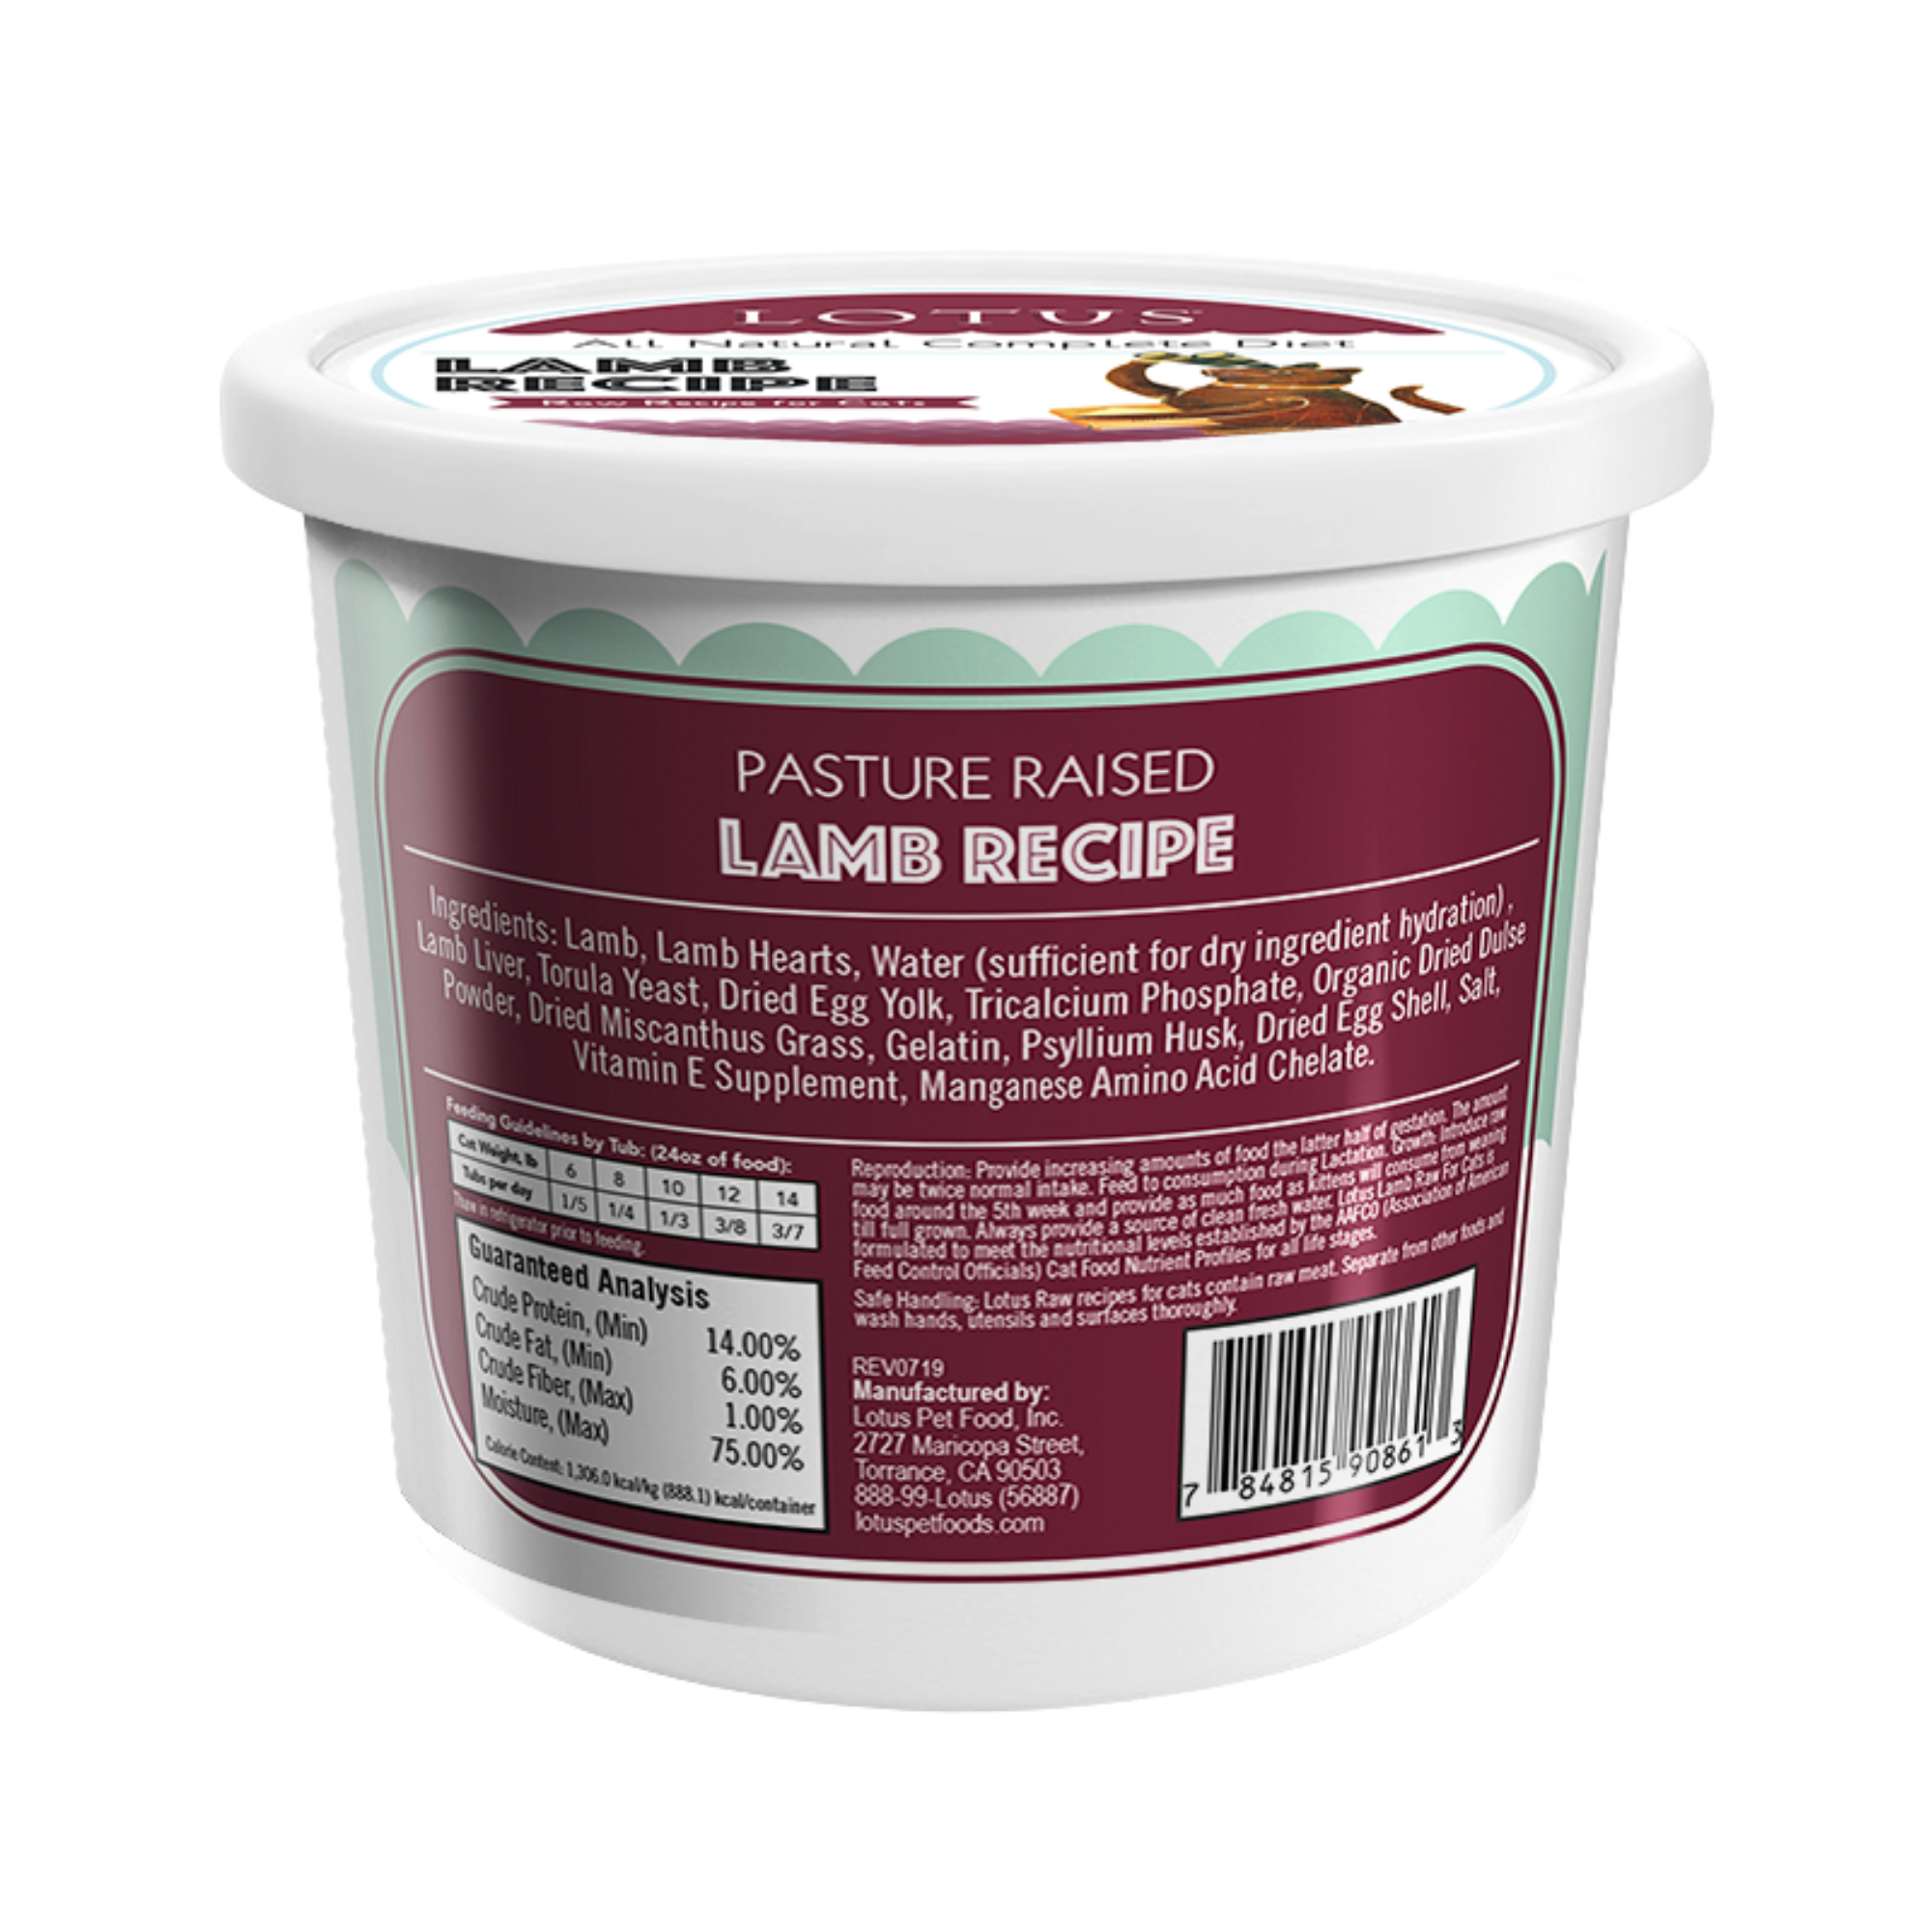 Lotus Lamb Raw Cat Food 24oz - Mutts & Co.